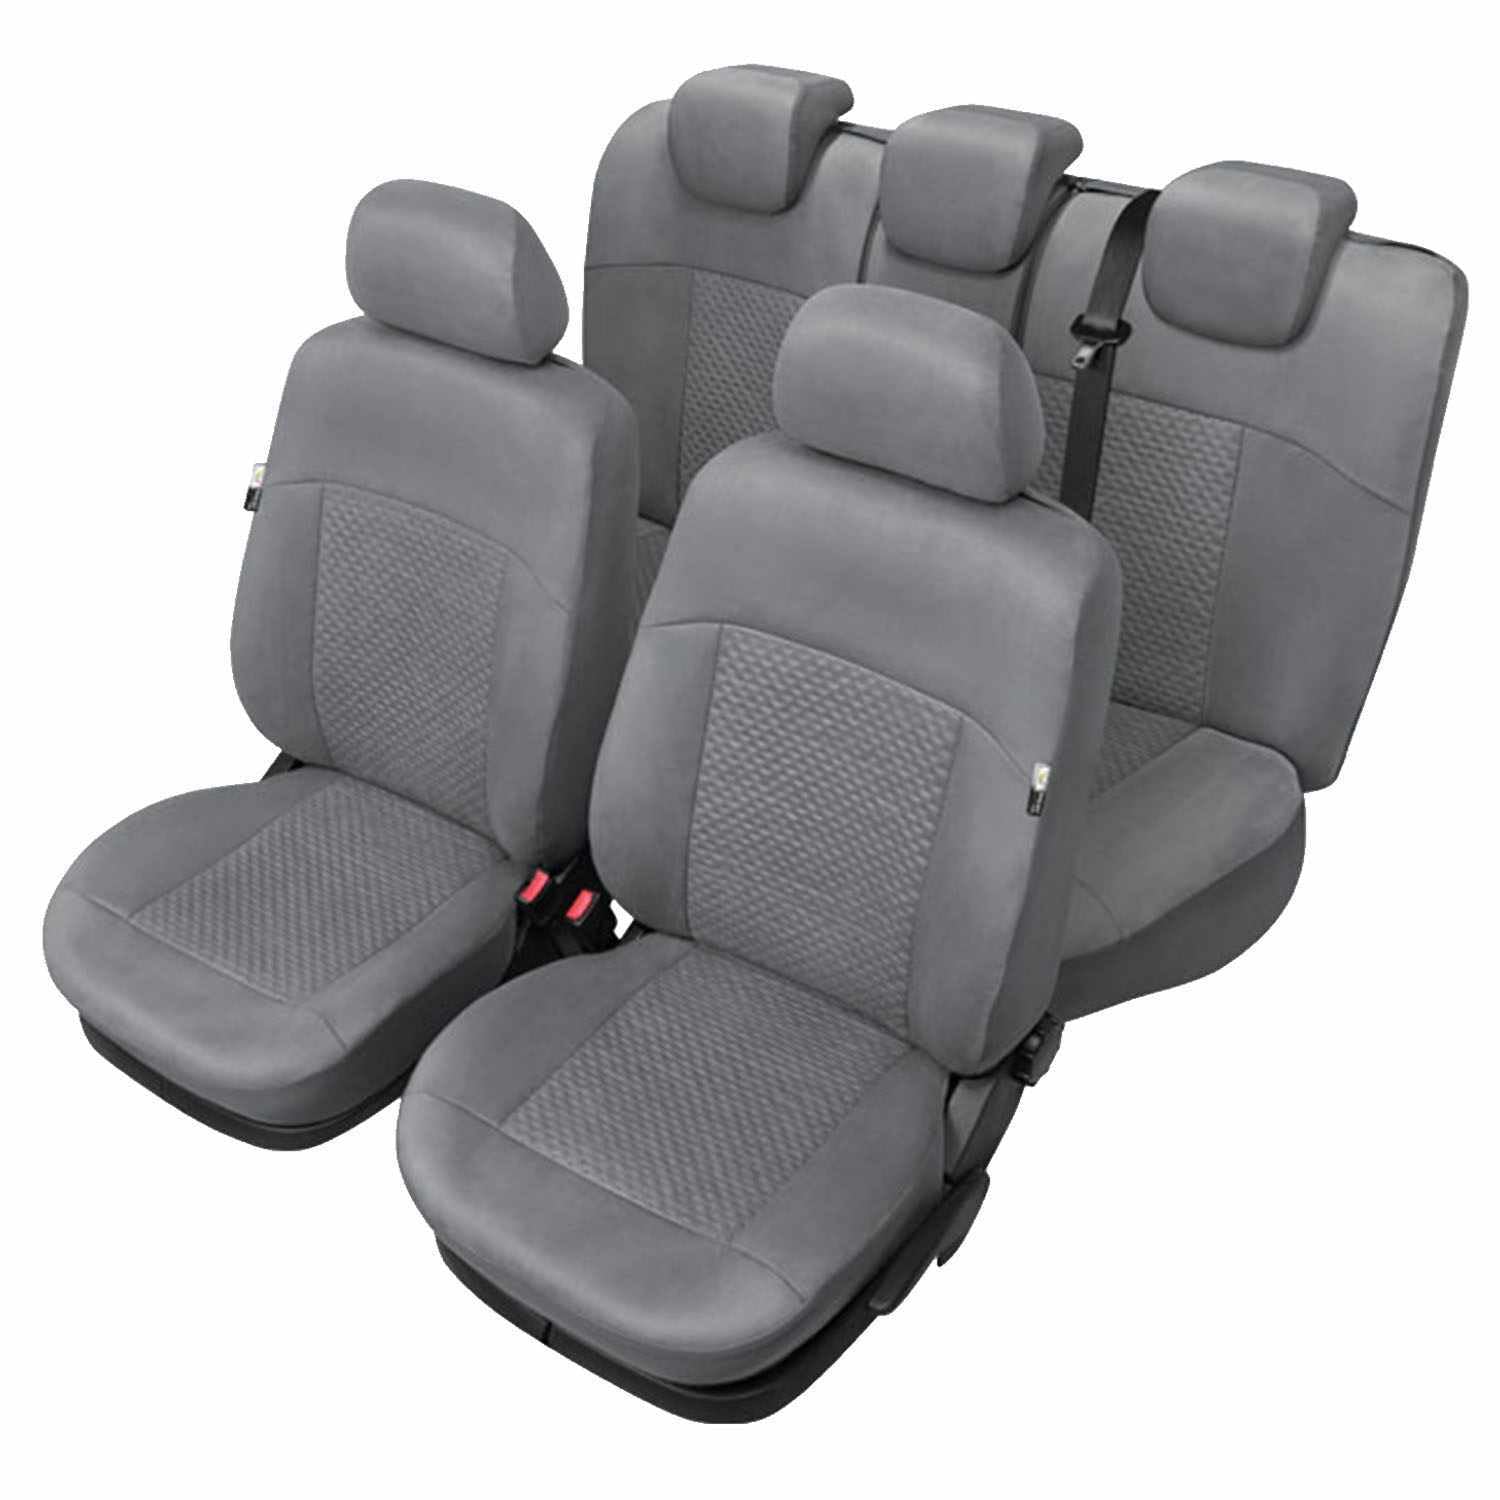 Autositzbezüge Autositzschoner Sitzbezüge Kompatibel mit Hyundai Getz Auto Sitzbezug Grau Autositzauflage Autositz Sitzauflagen Tuning Auto Zubehör Innenraum von Saferide